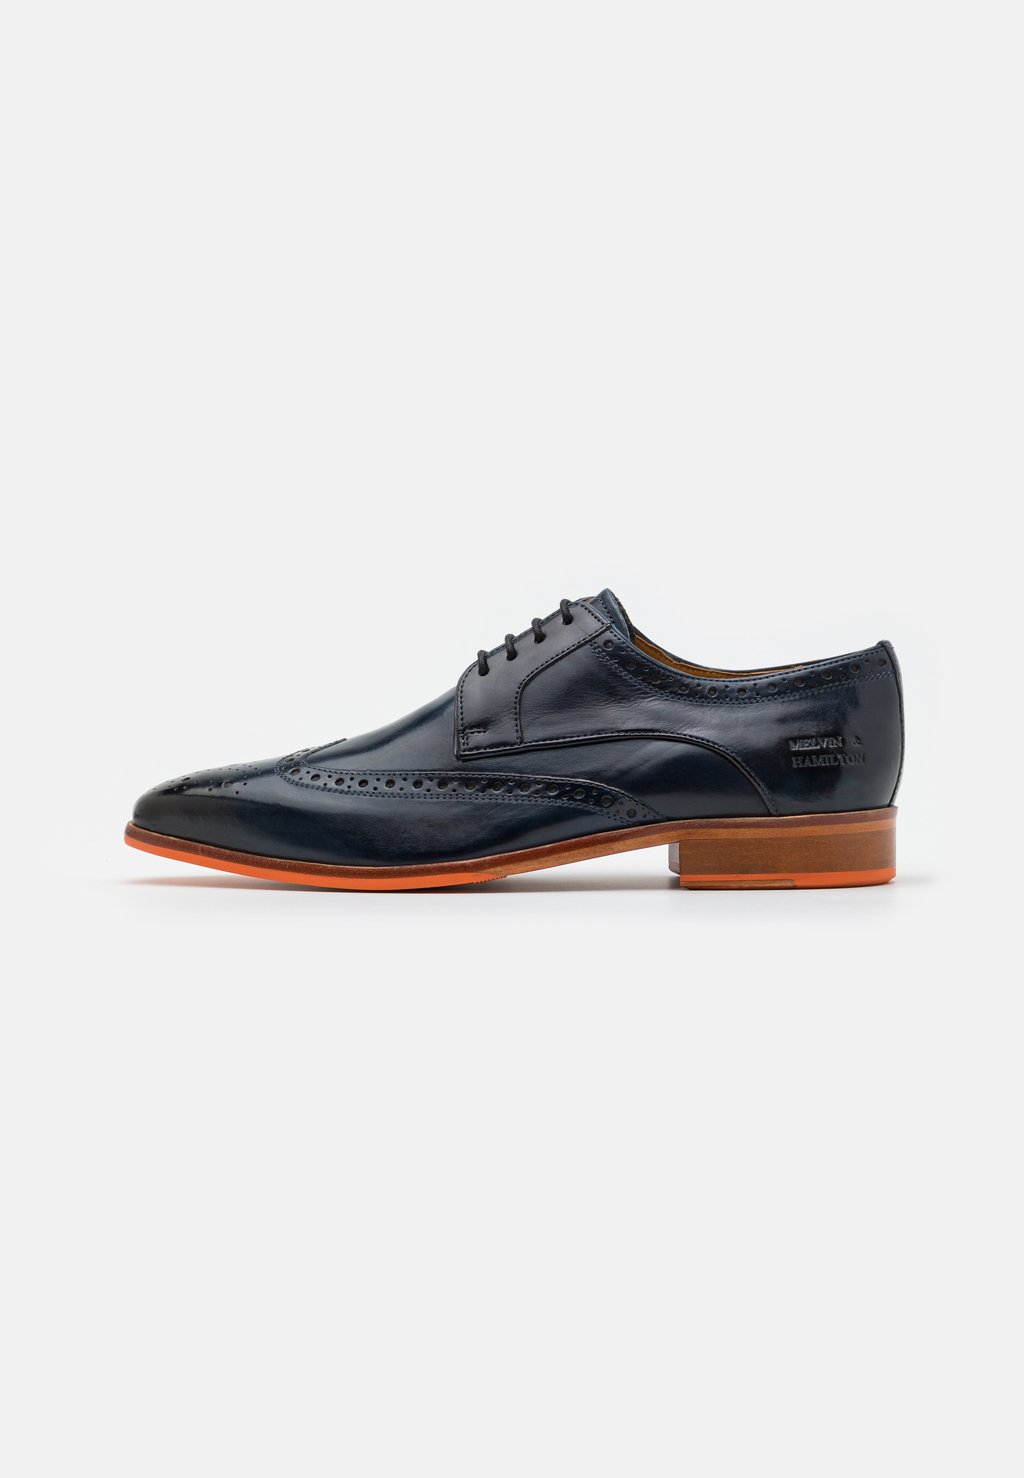 Элегантные туфли на шнуровке Lewis 3 Melvin & Hamilton, цвет marine/tan/orange